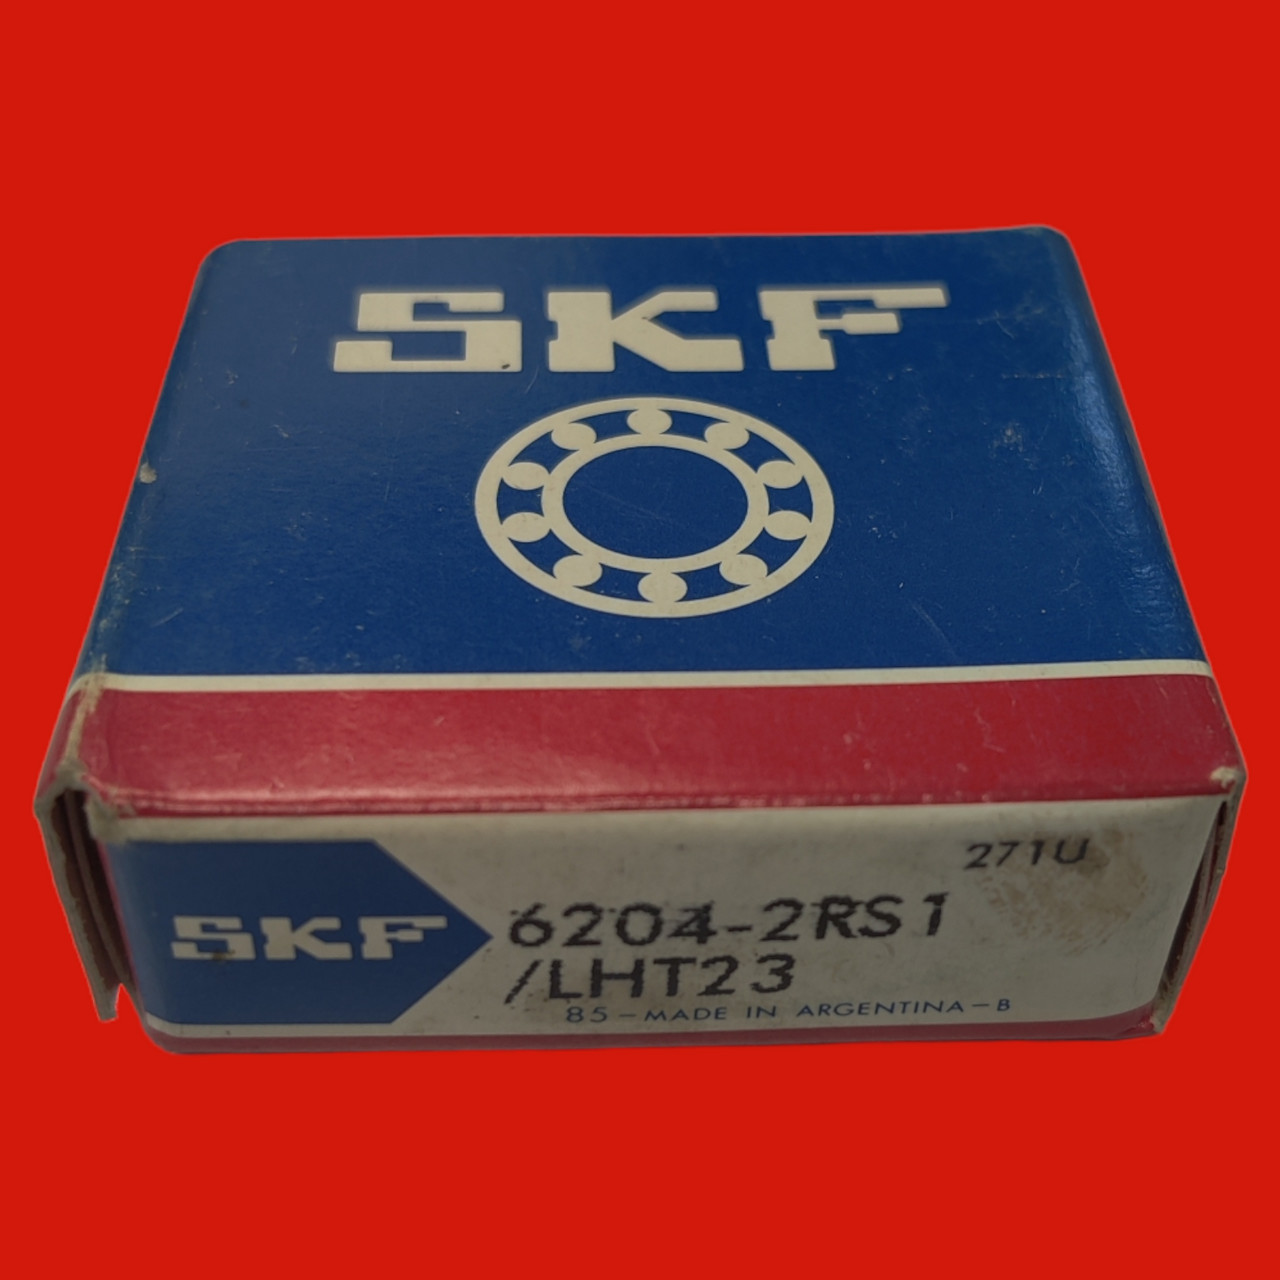 SKF 6204-2RS1/LHT23 Deep Groove Ball Bearing